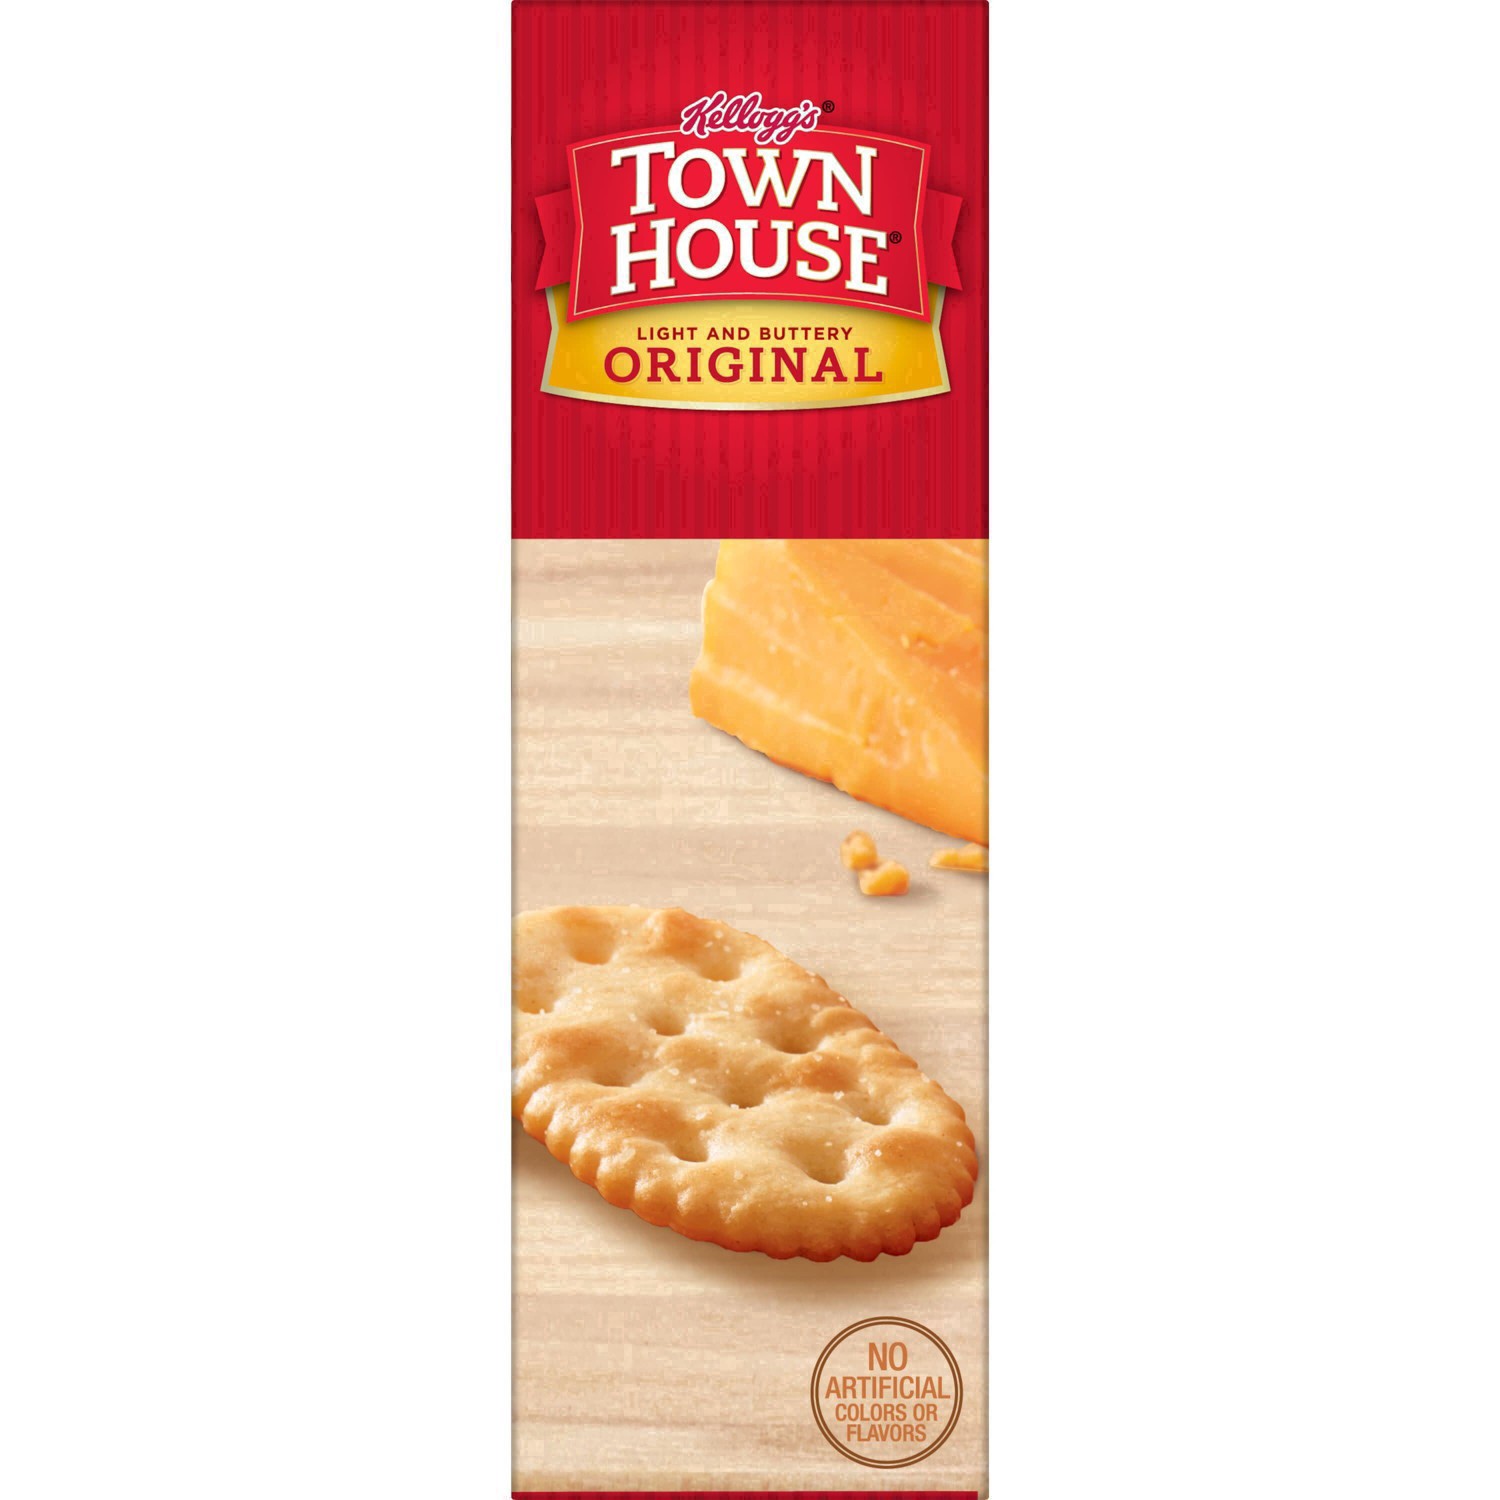 slide 42 of 101, Town House Kellogg's Town House Original Snack Crackers - 13.8oz, 13.8 oz